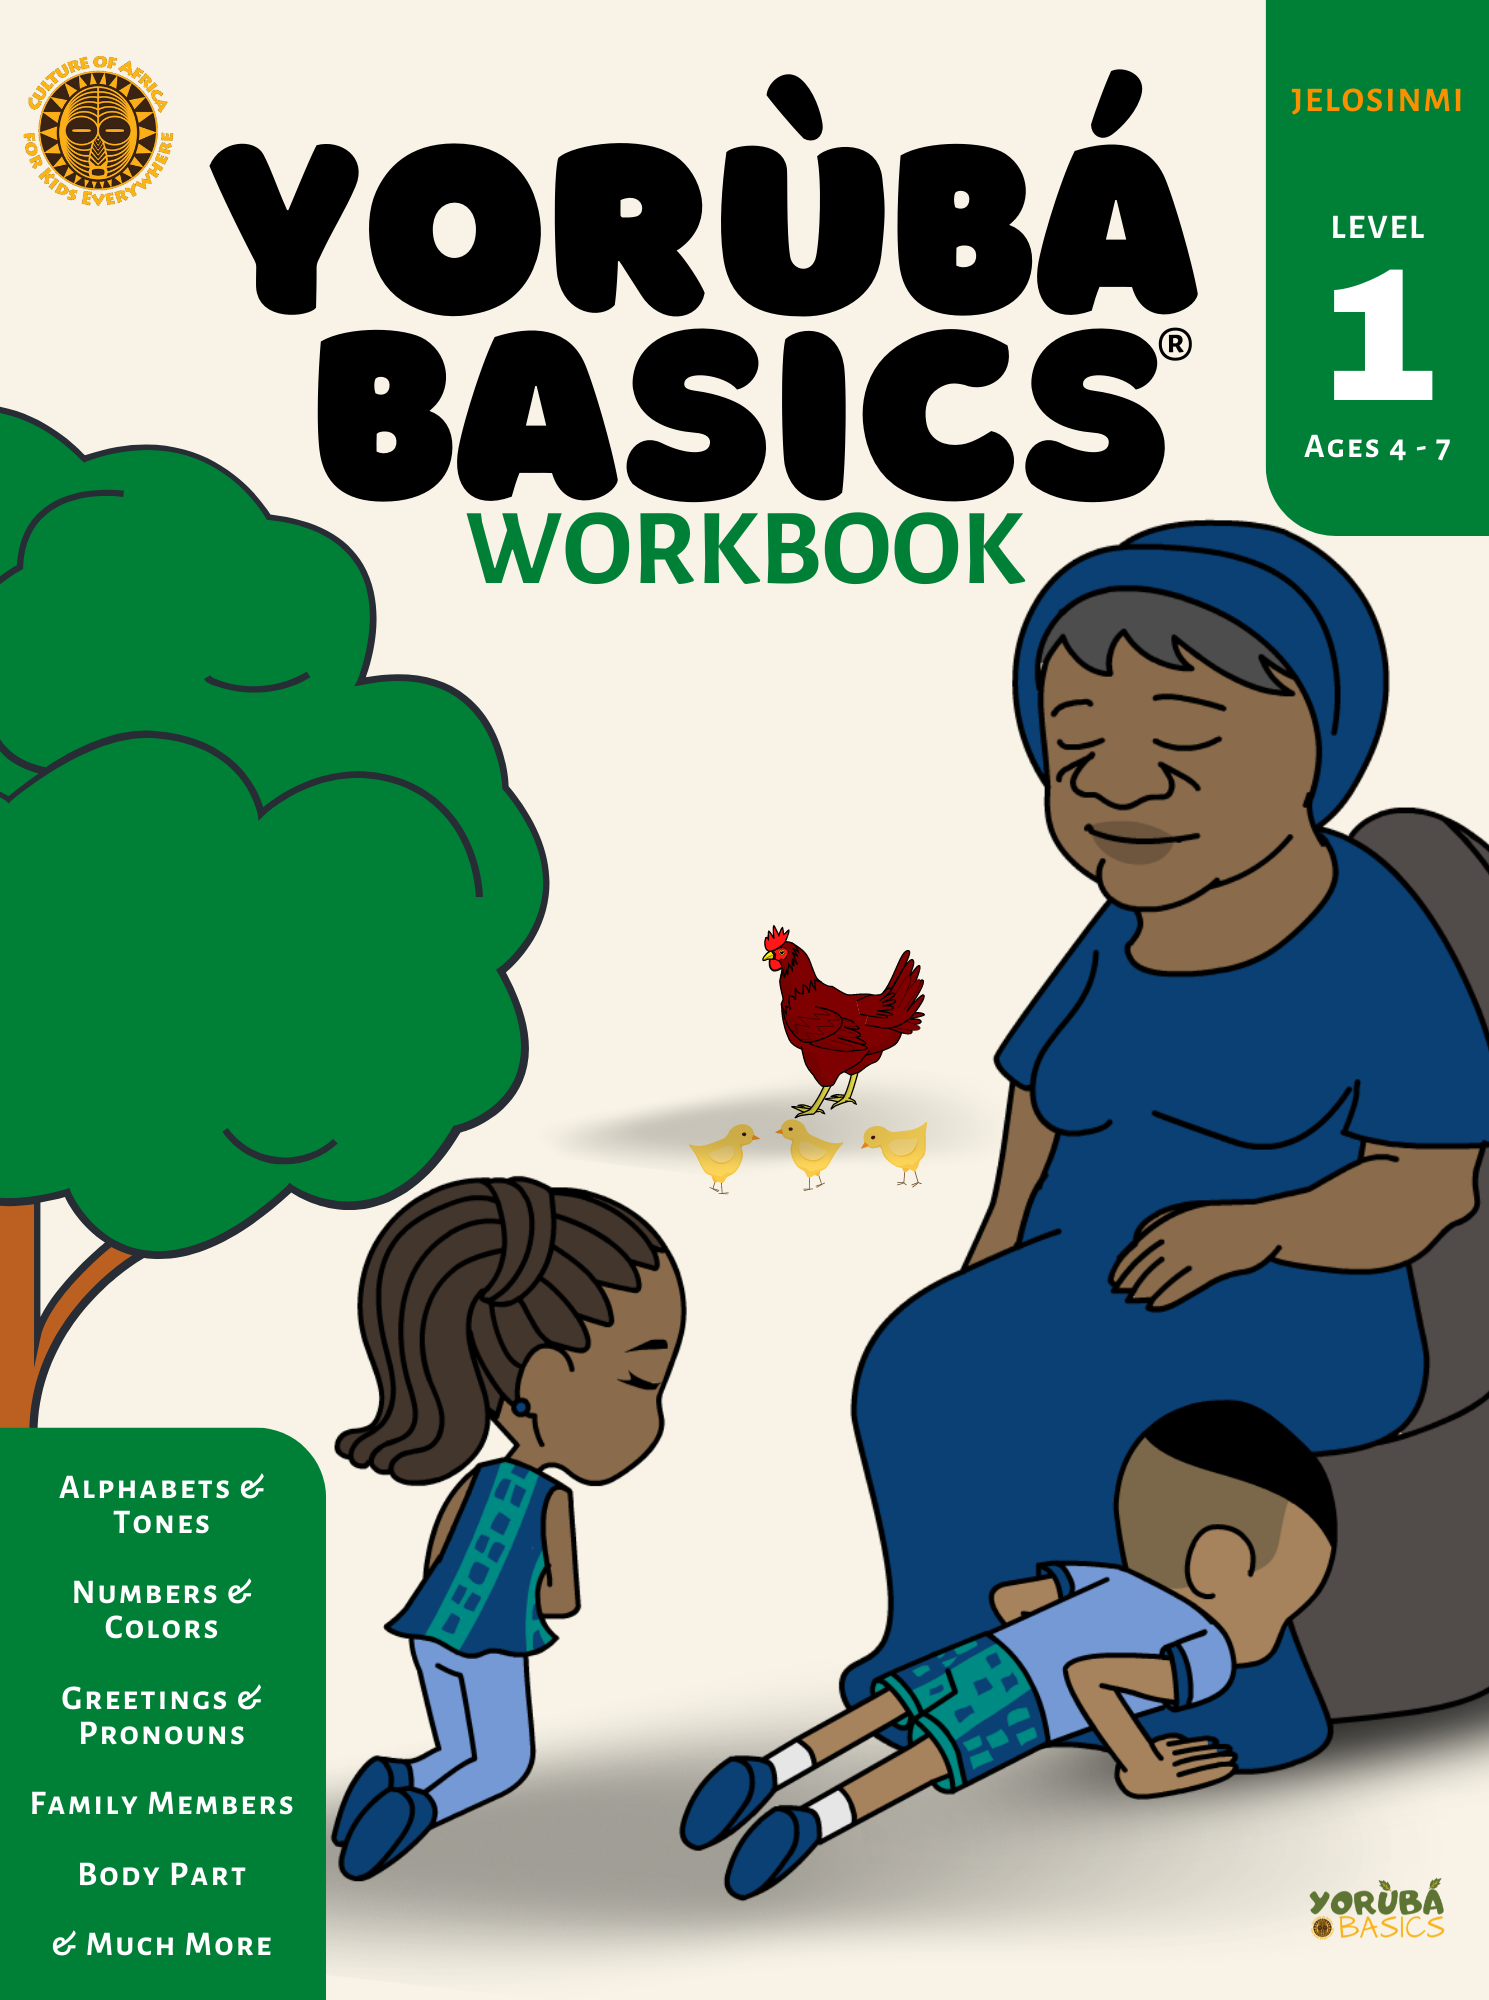 YORUBA BASICS® WORKBOOKS FOR BEGINNERS  - LEVEL 1  |  4 to 7yrs